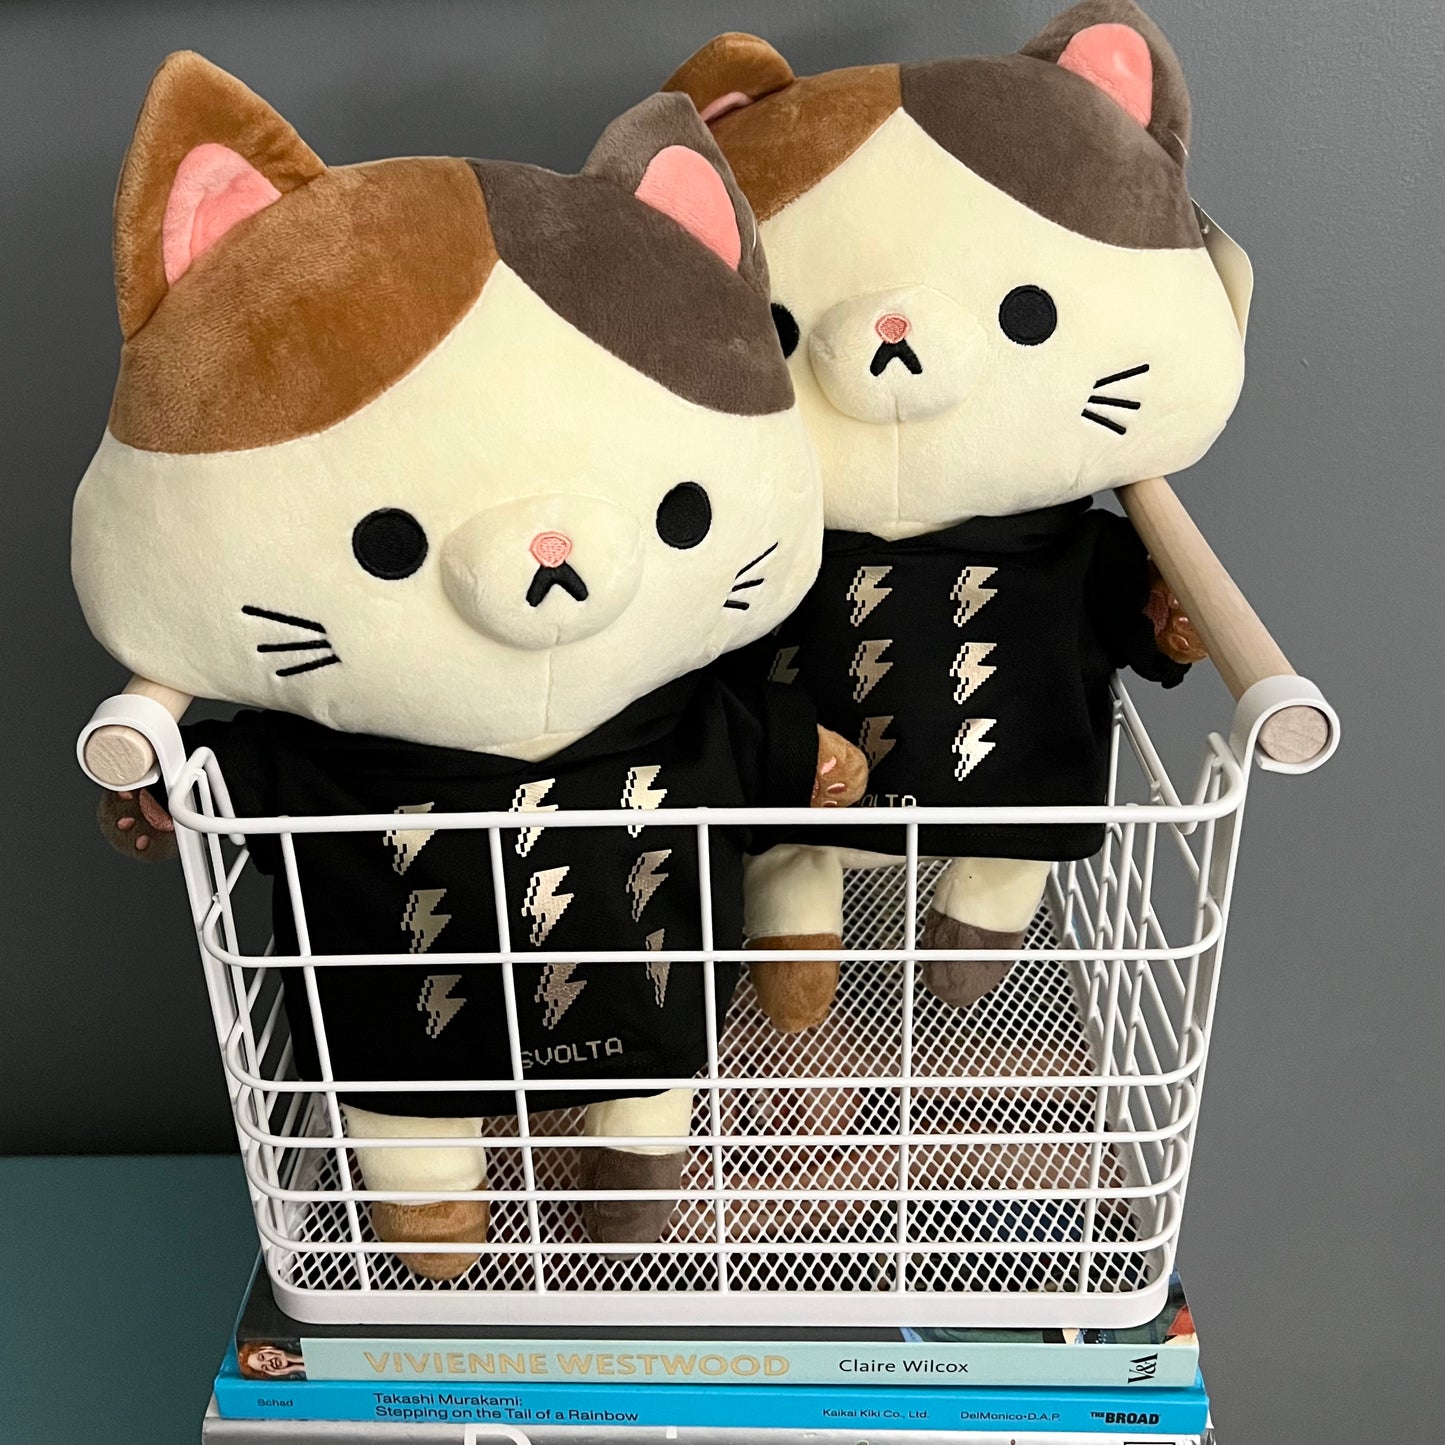 Mittens Kitty Calico 12" Plush Toy by Chocolett - SVOLTA Edition